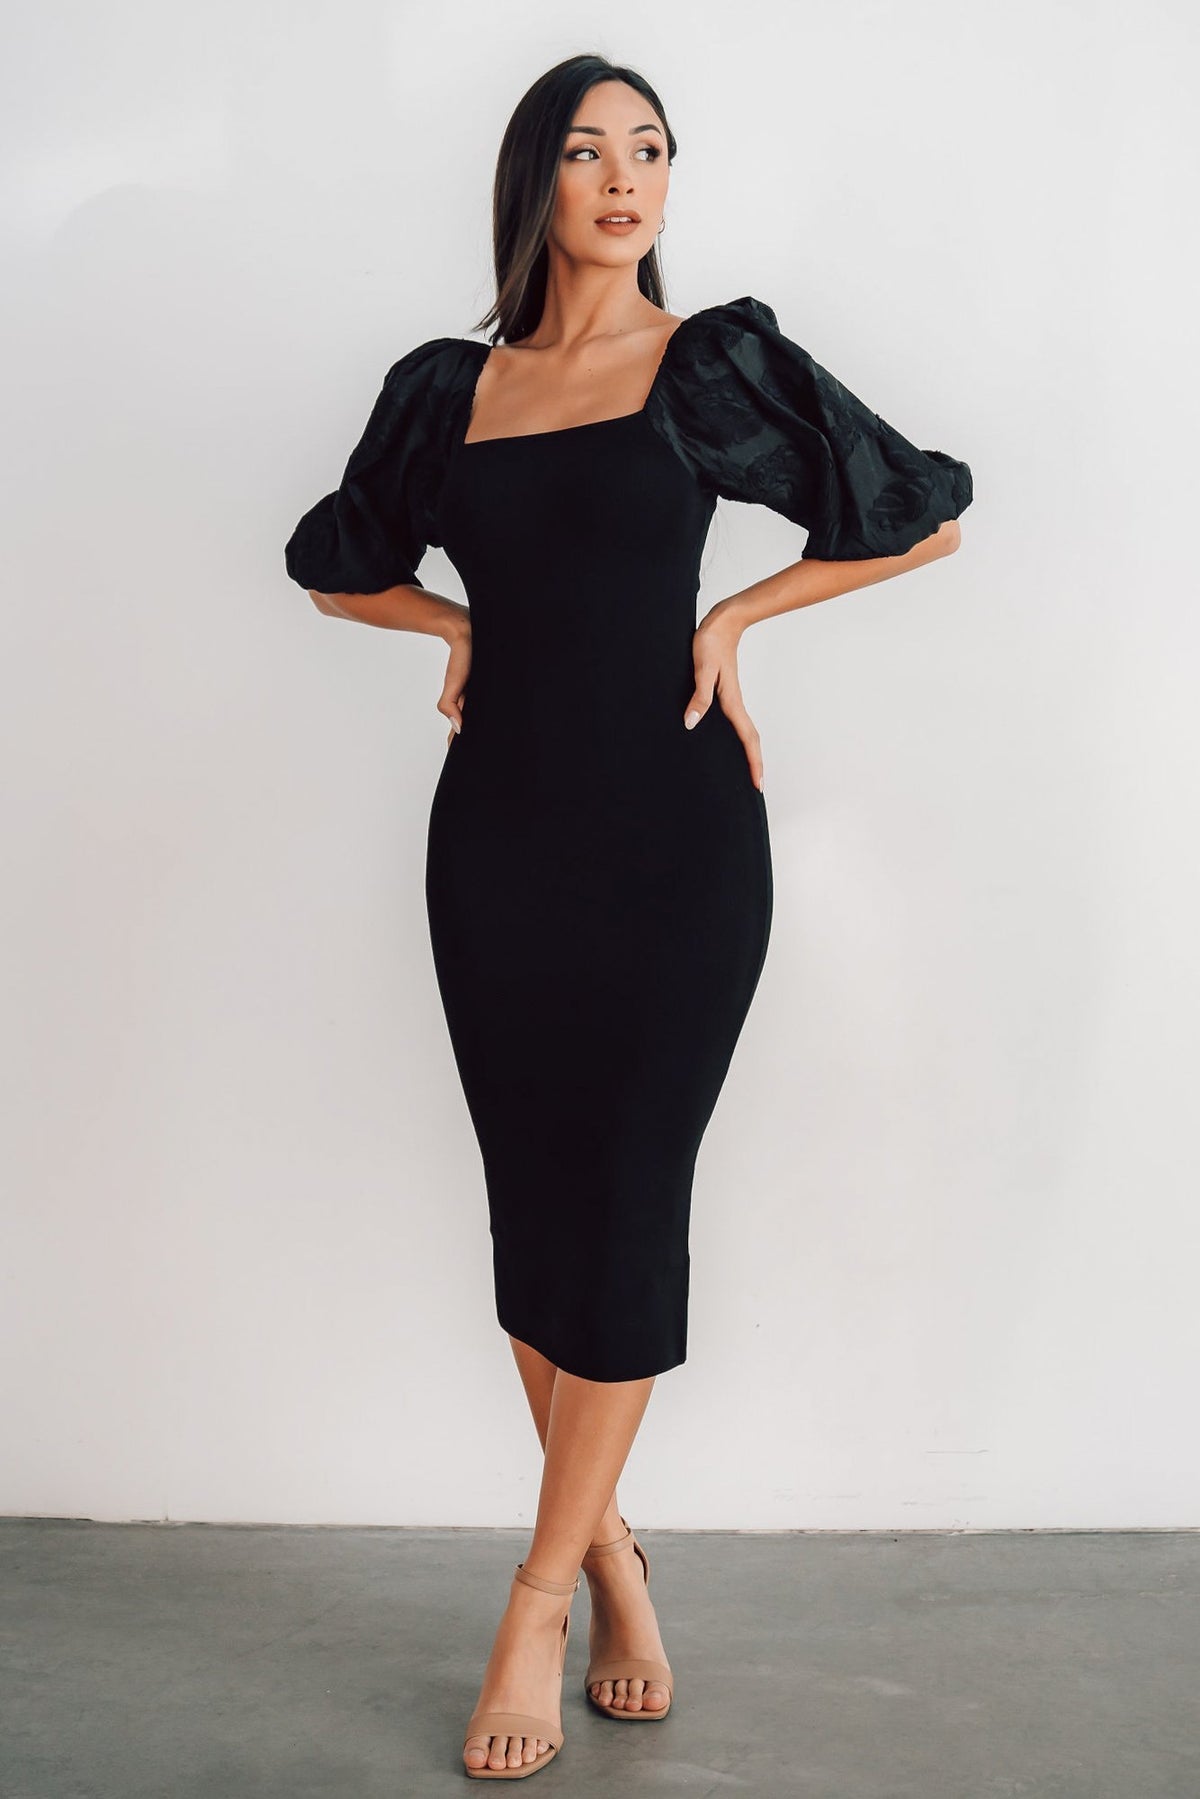 Sexy Black Dress - LBD - Bodycon Dress - Midi Dress - $36.00 - Lulus